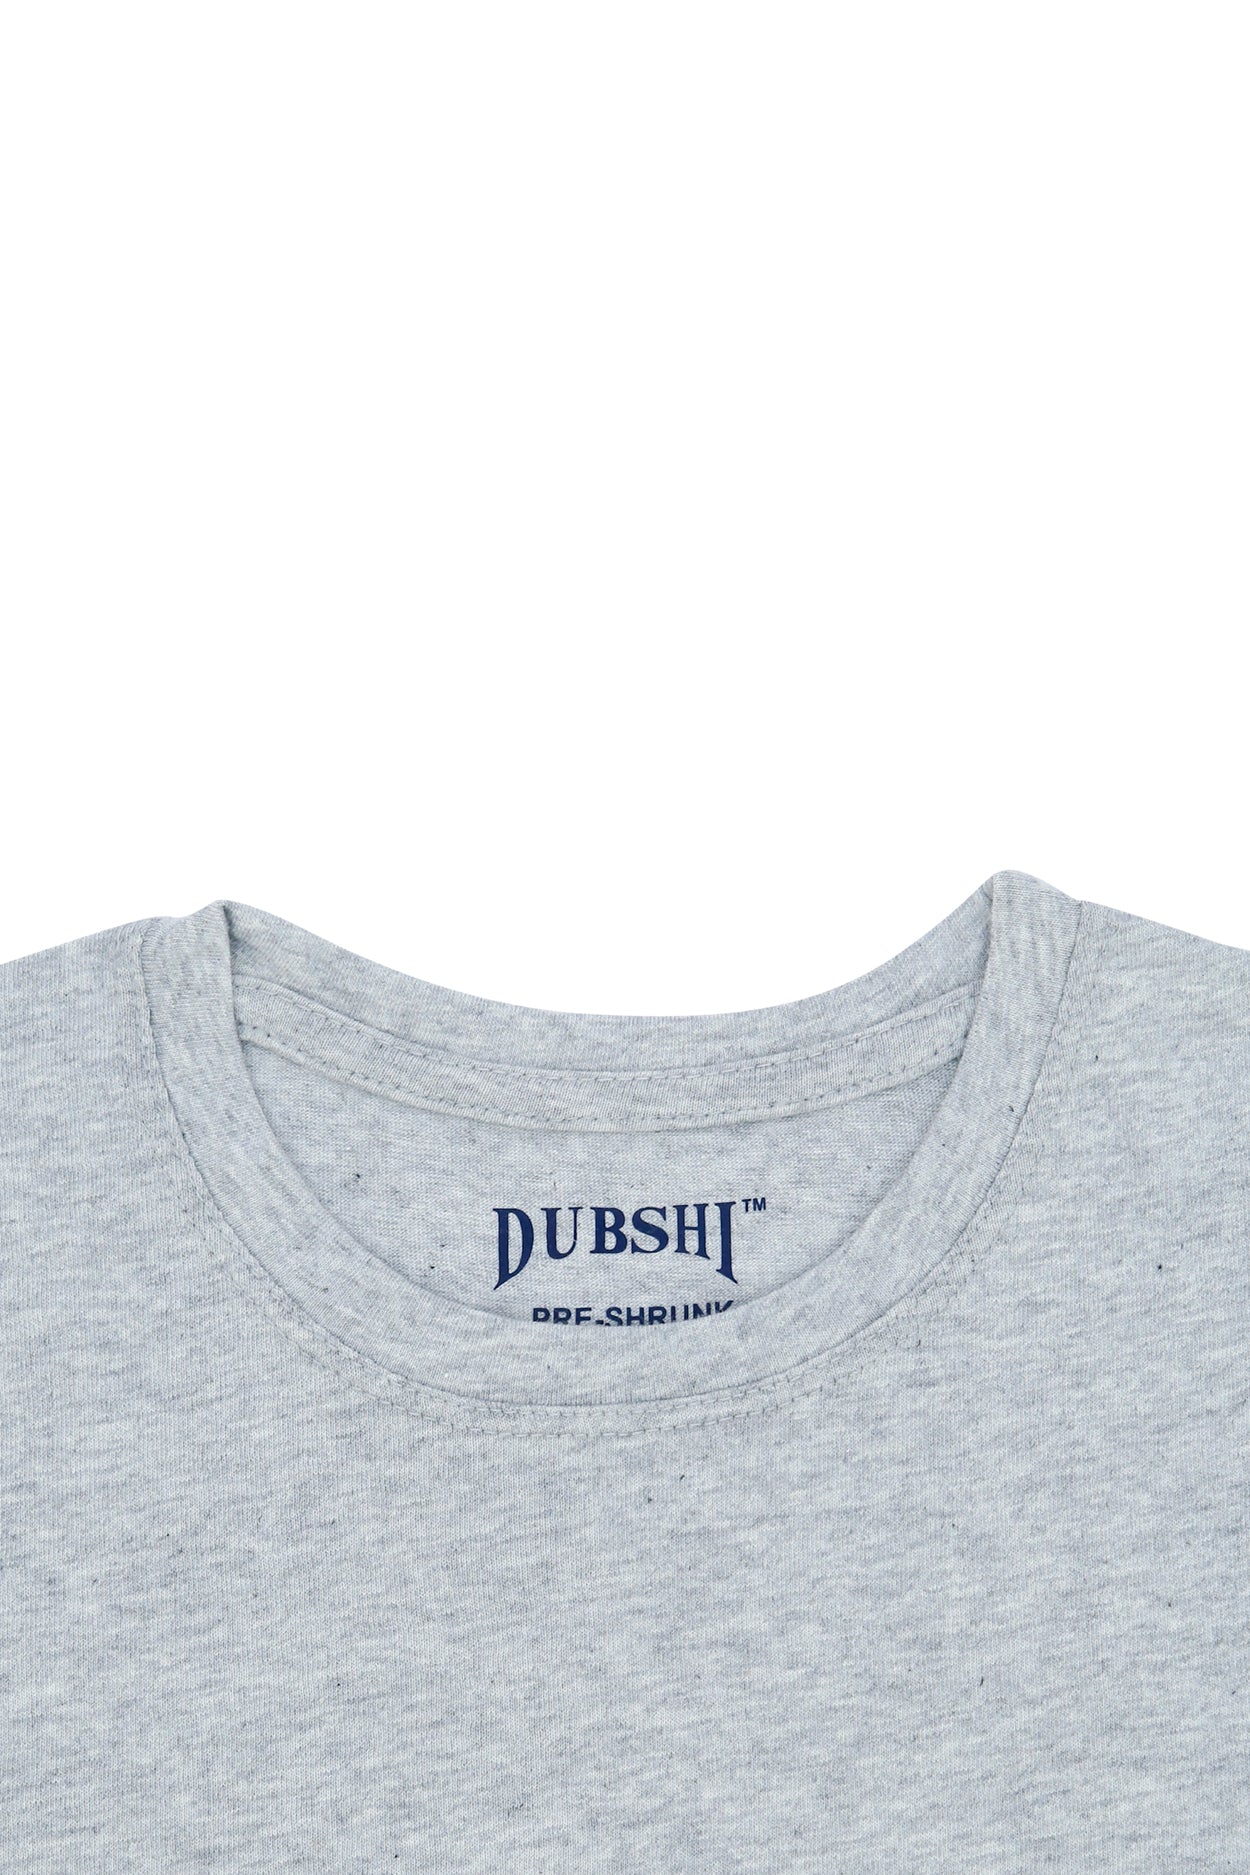 Unisex Casual T-Shirts (USA-13)